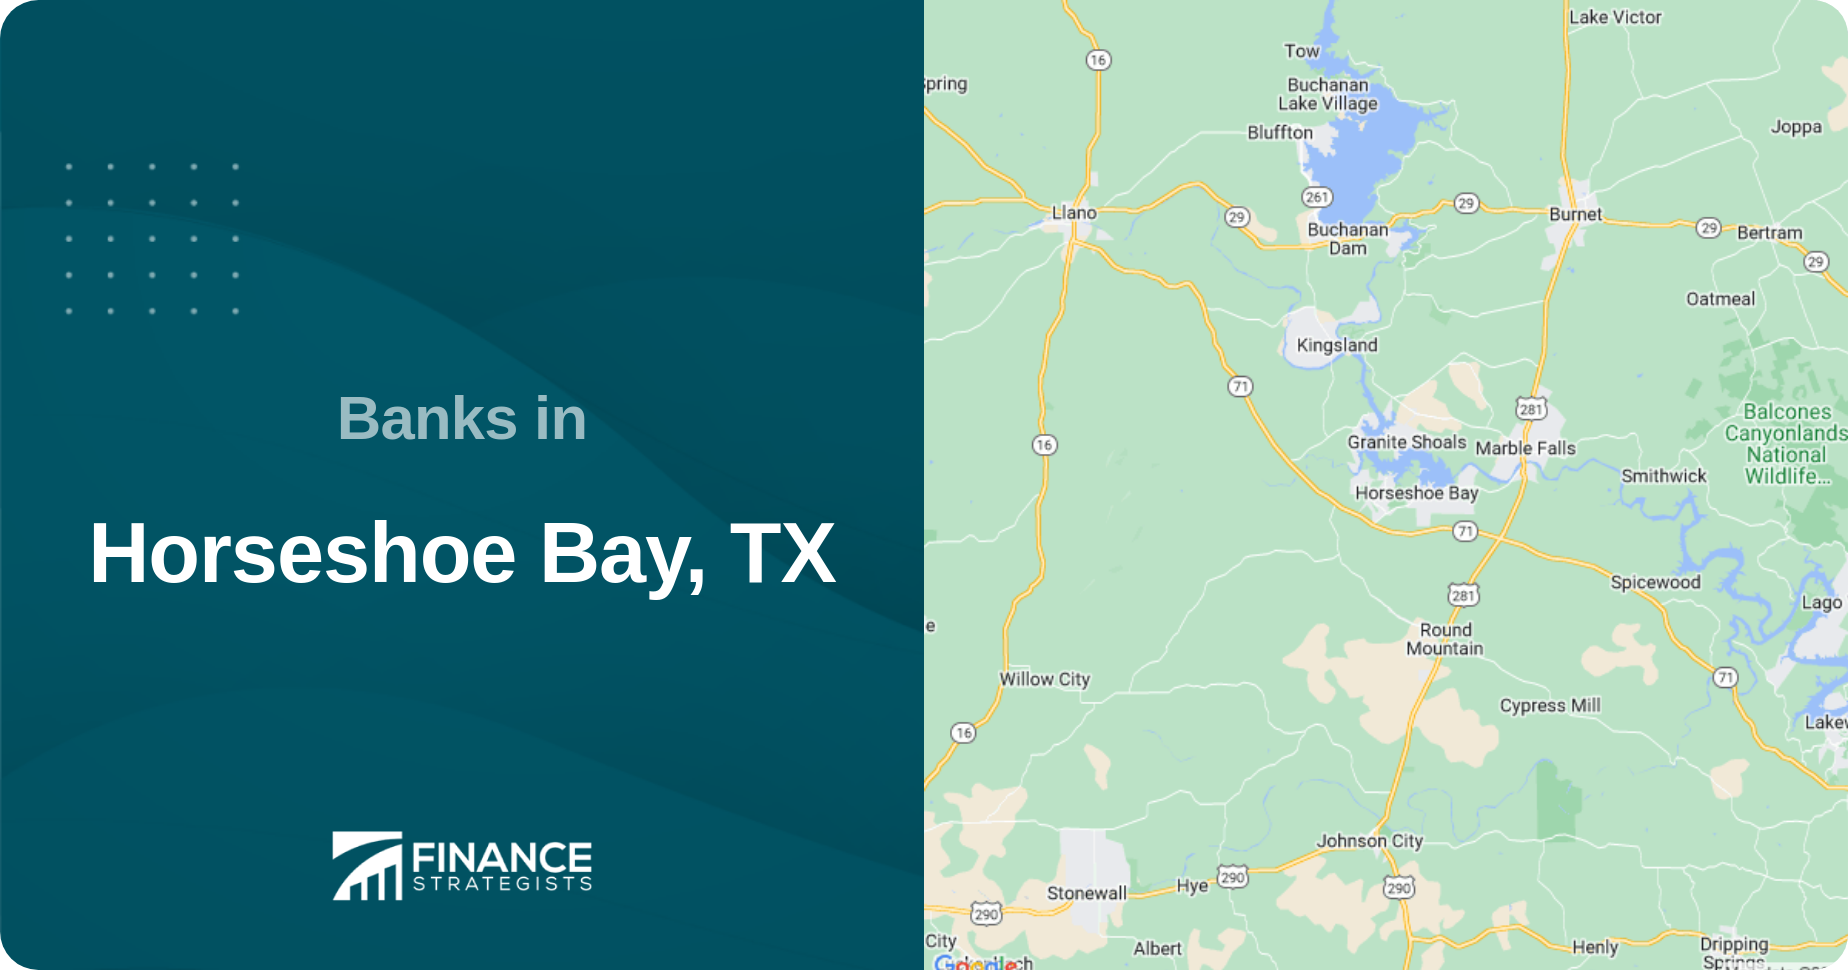 Banks in Horseshoe Bay, TX